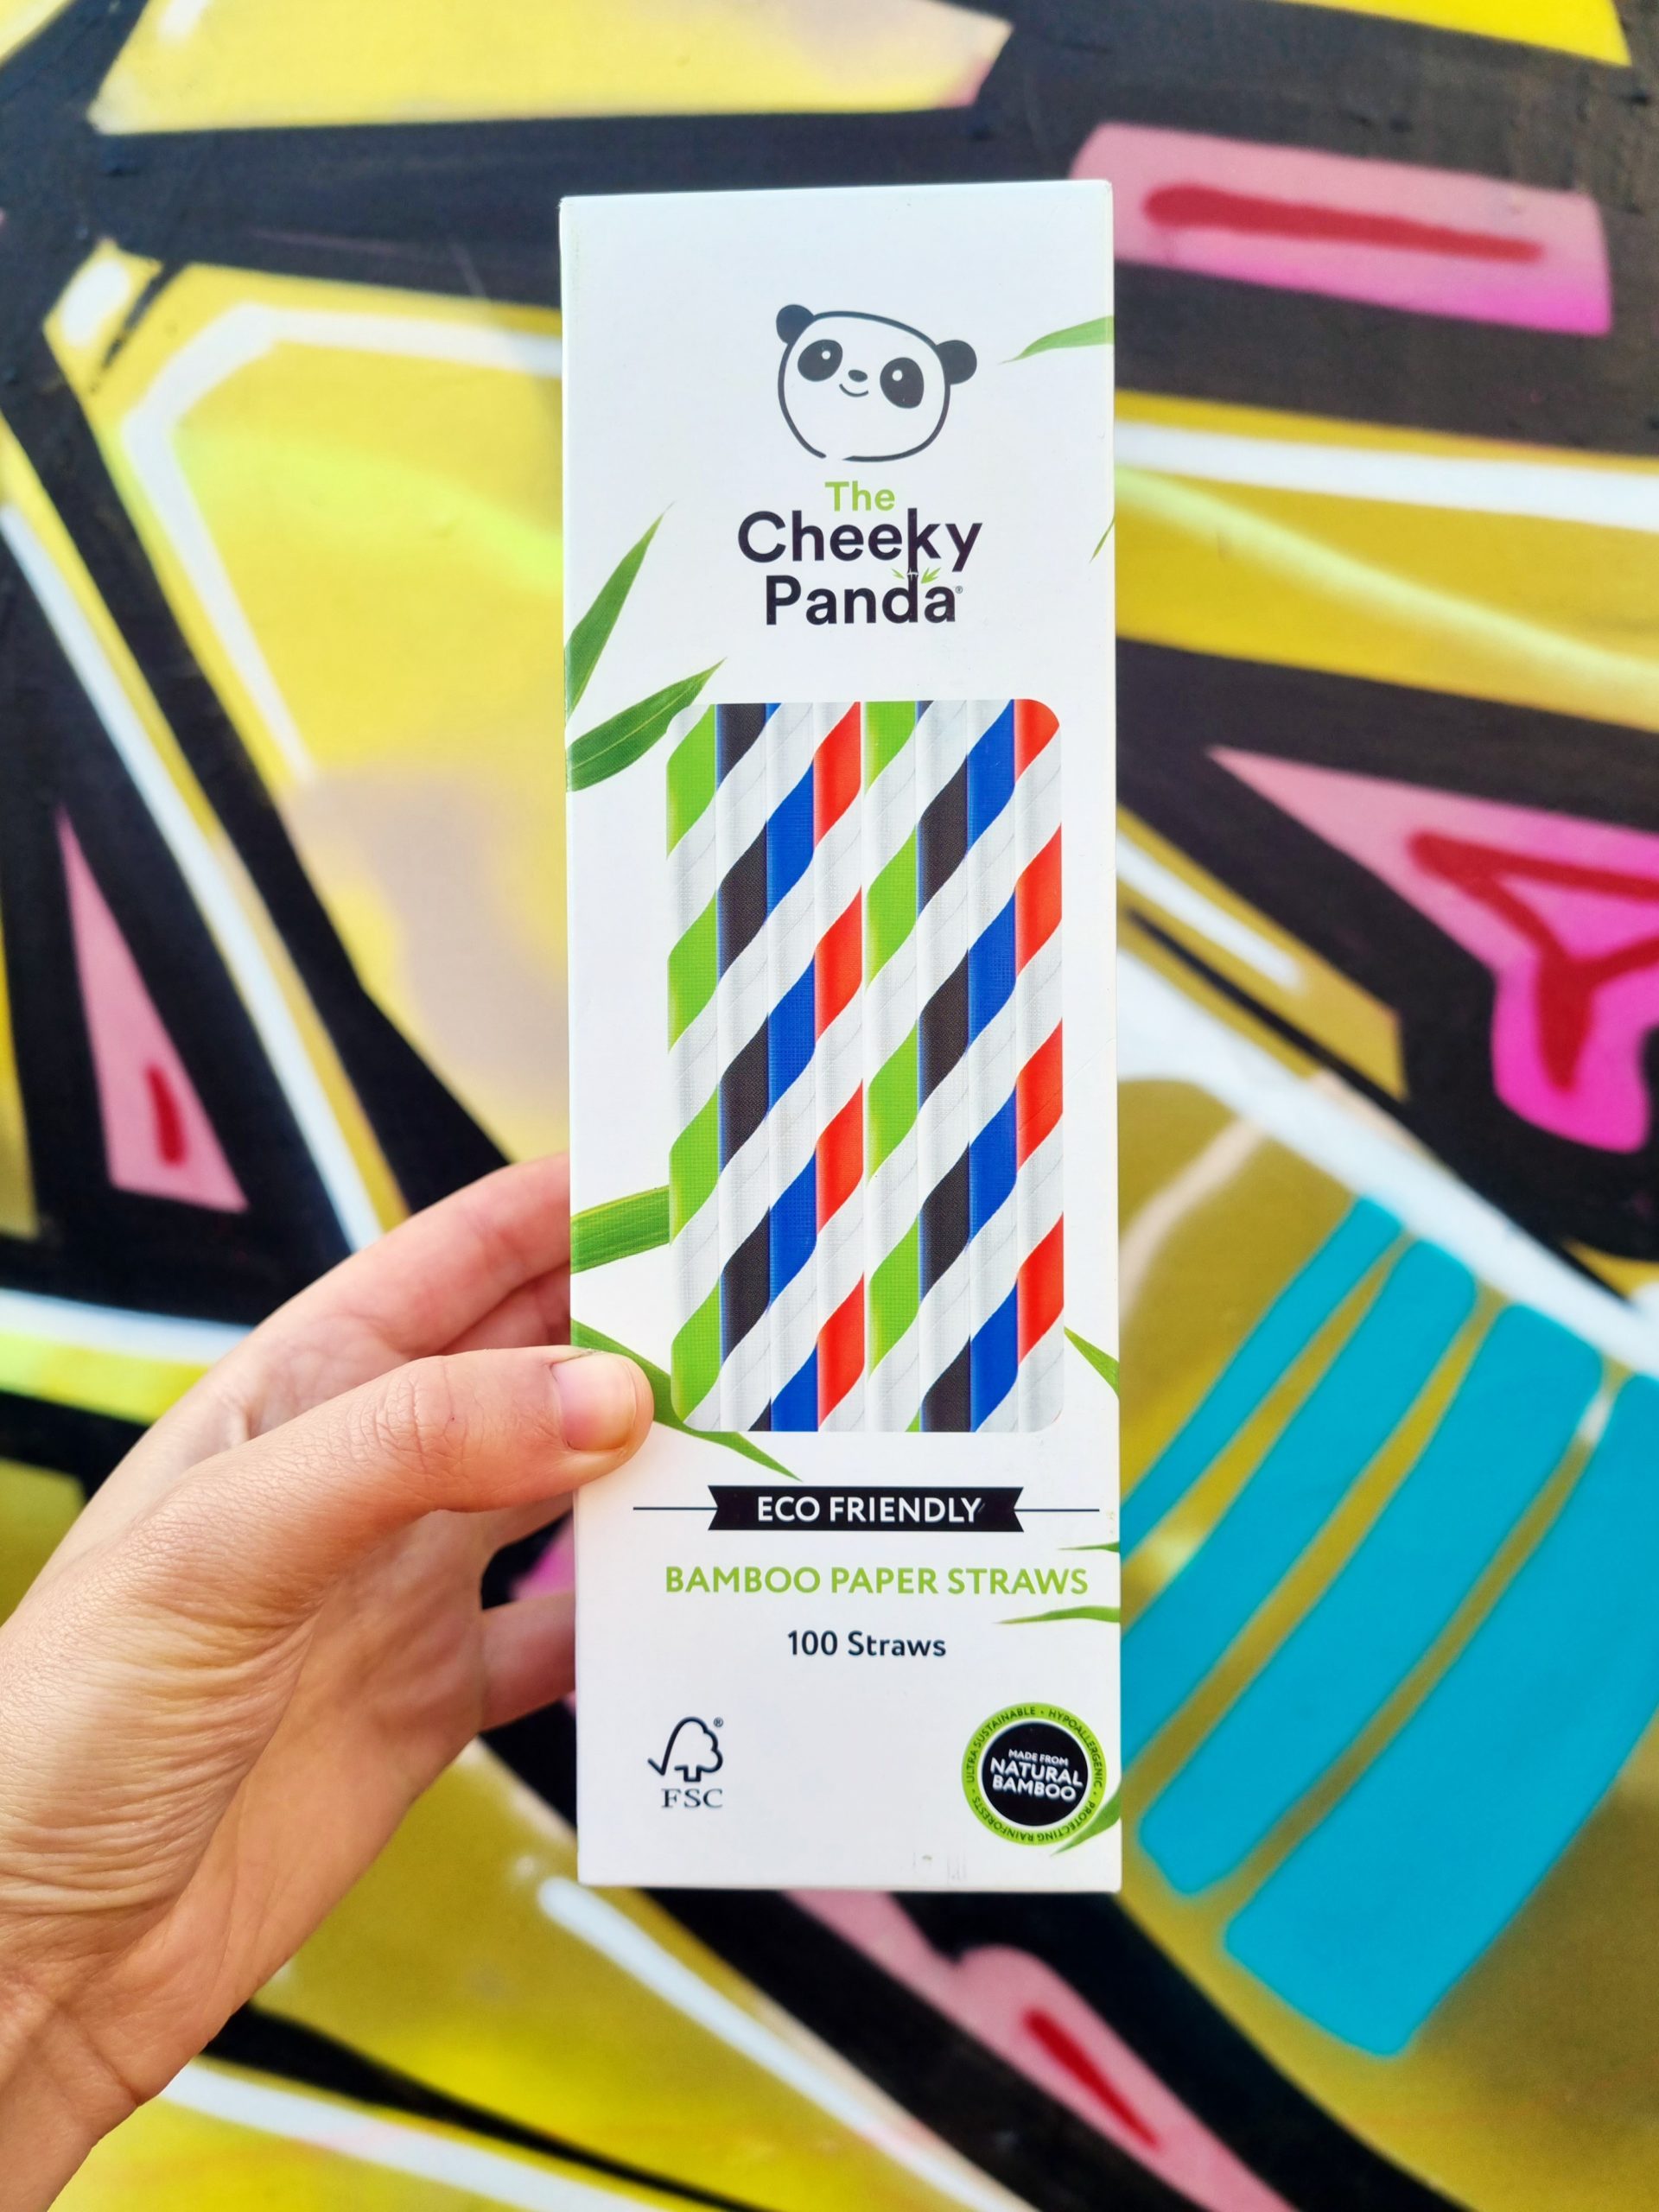 <img src="cheeky.jpg" alt="cheeky panda bamboo eco friendly gift ideas"/> 